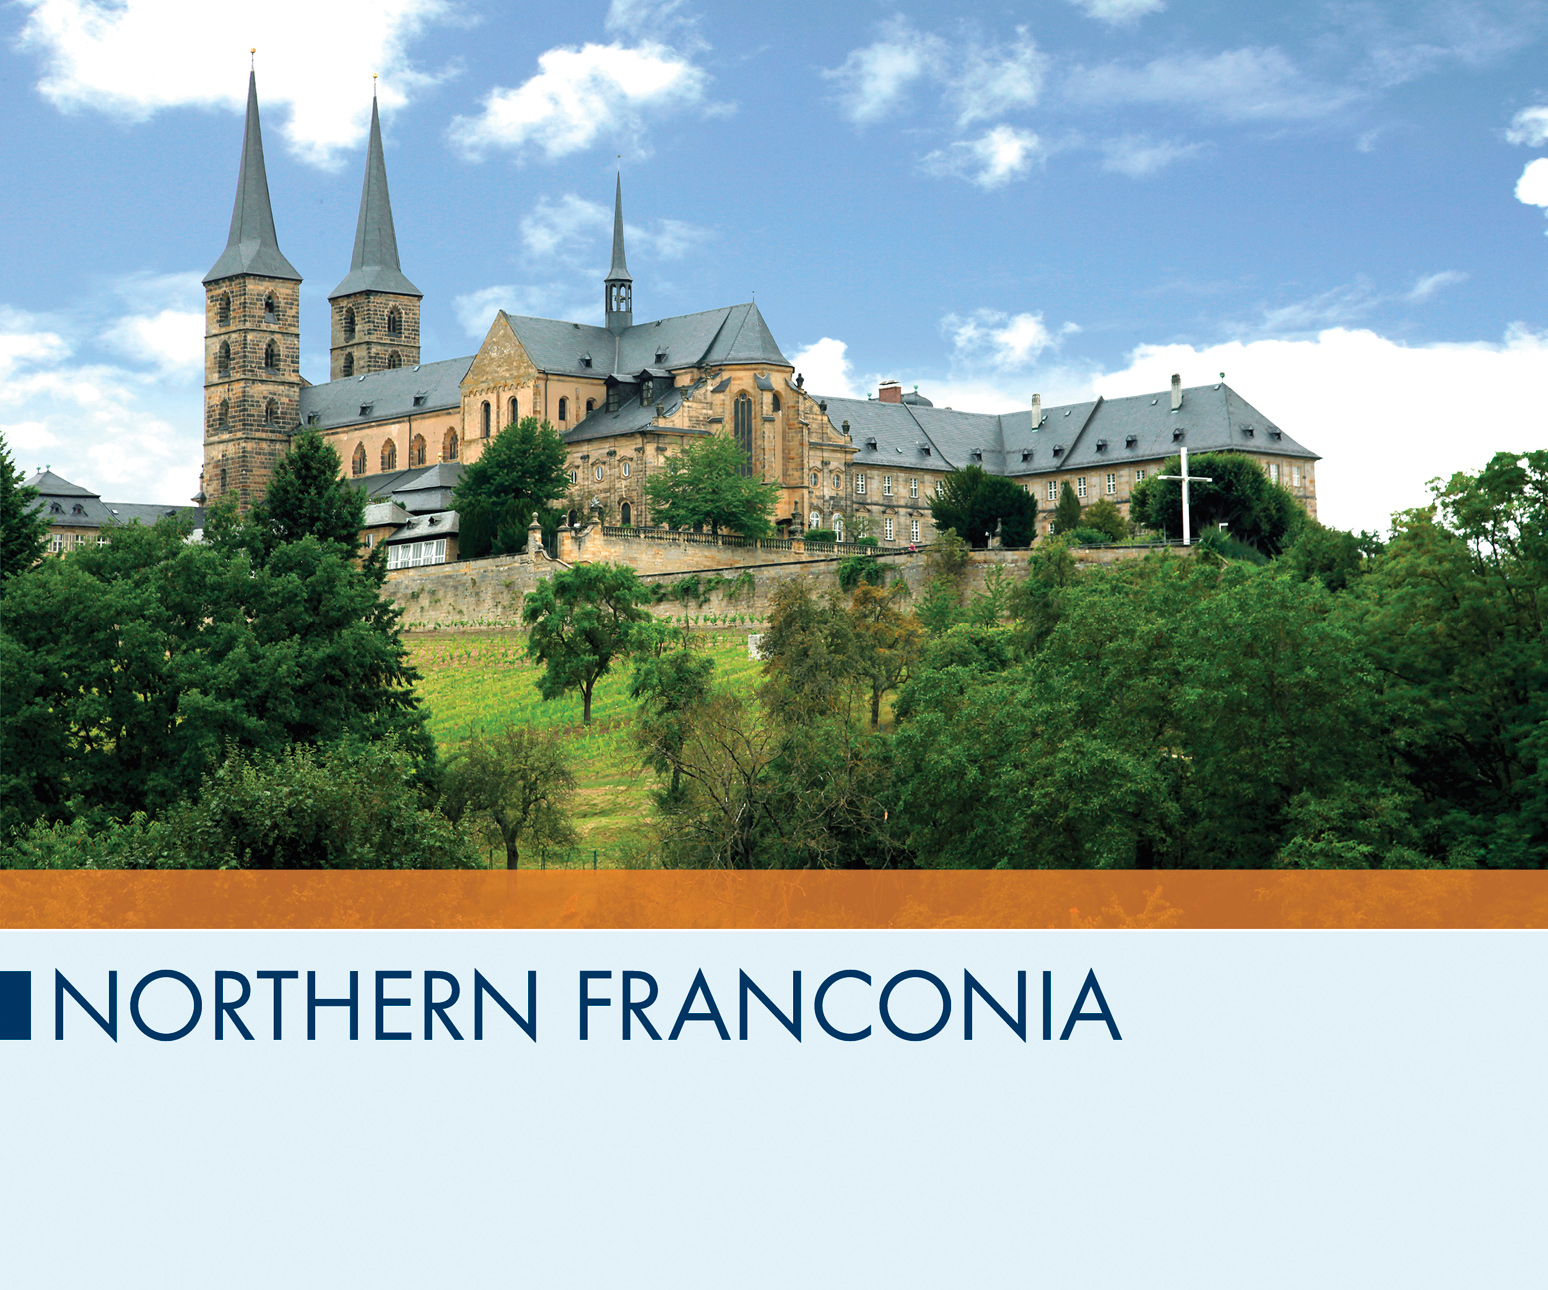 Northern Franconia